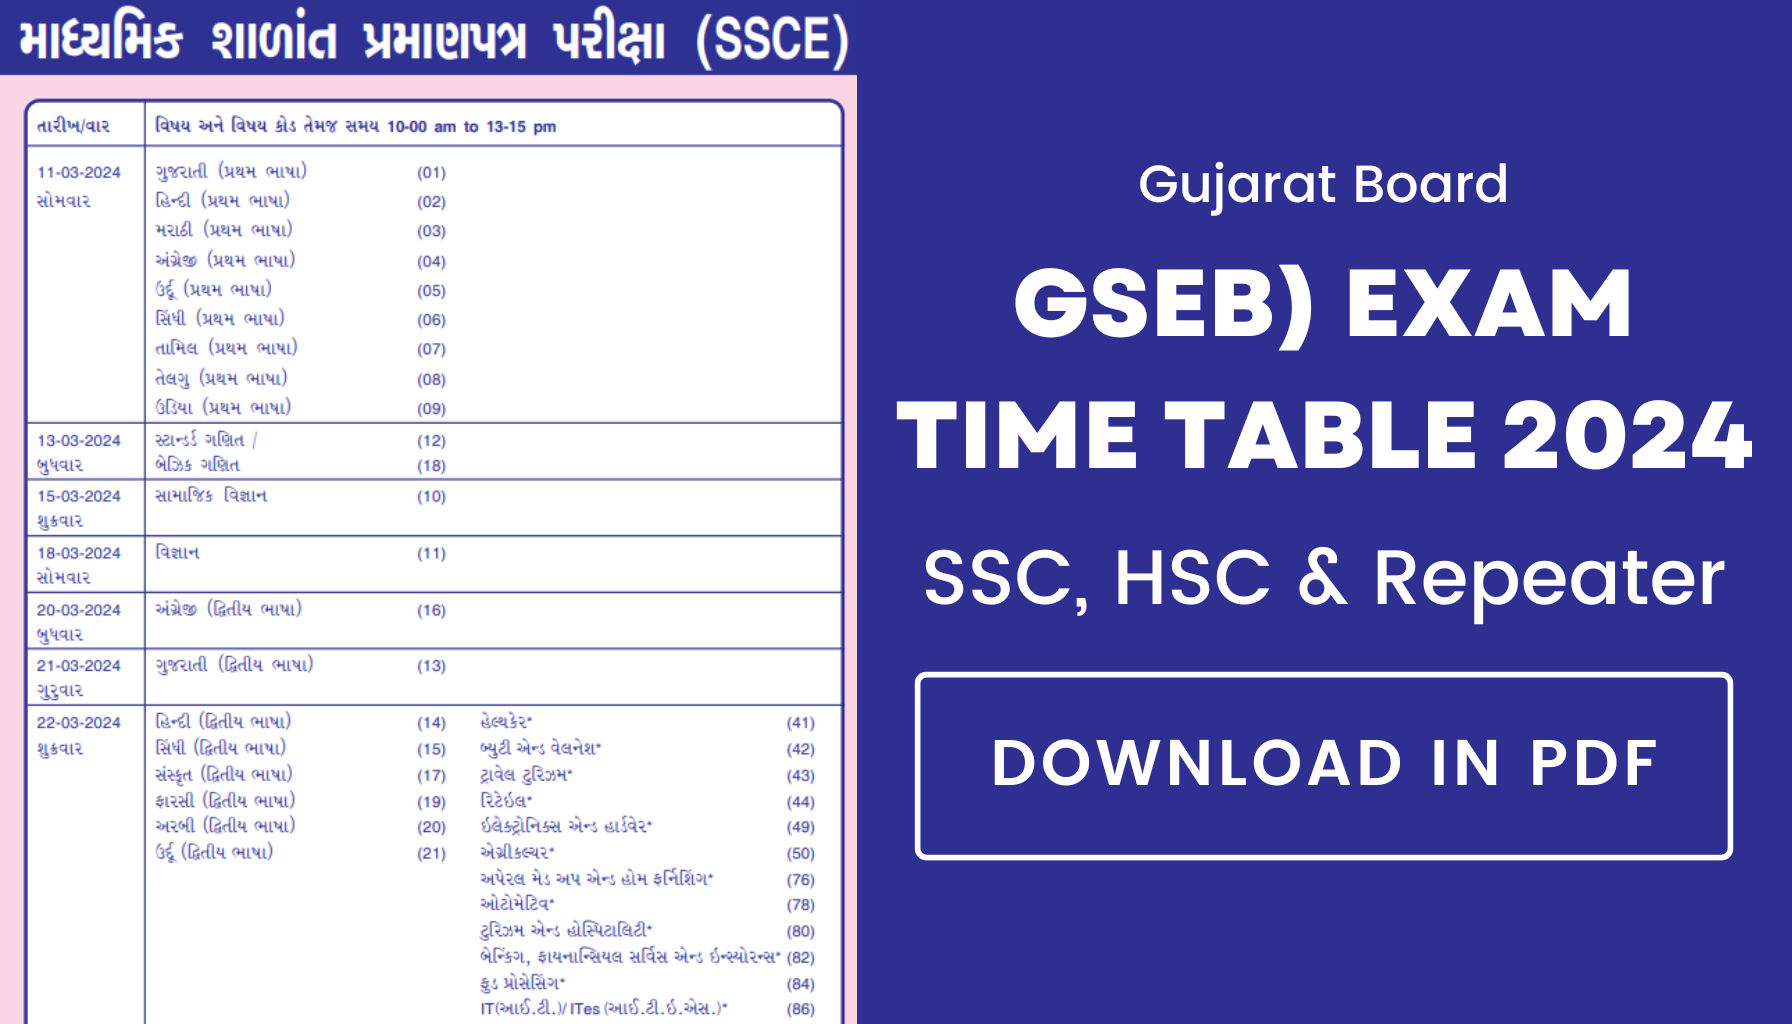 Gujarat Board (GSEB) Exam Time Table 2024 Download in PDF